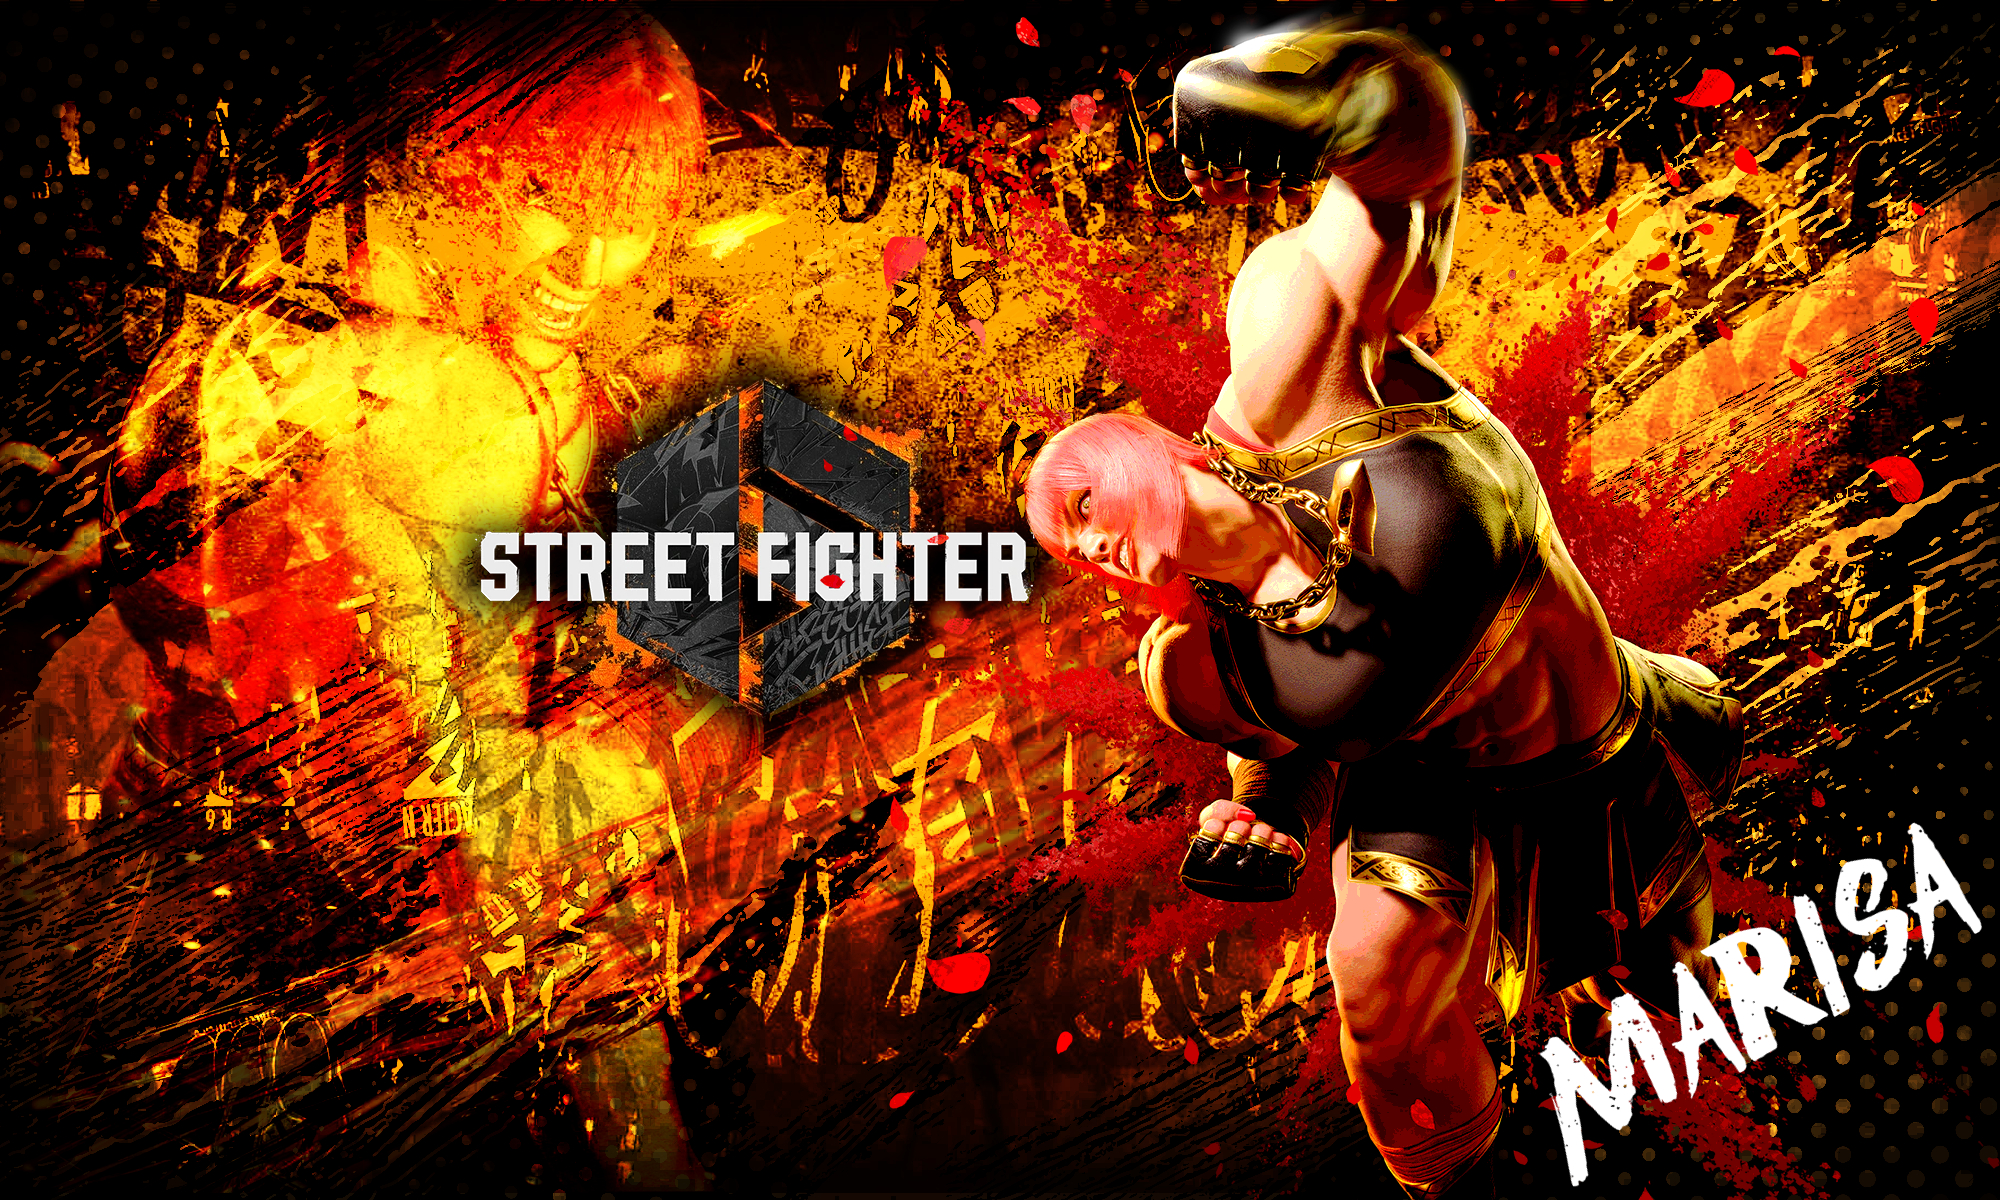 street fighter 6 - Cammy wallpaper by CR1ONE on DeviantArt